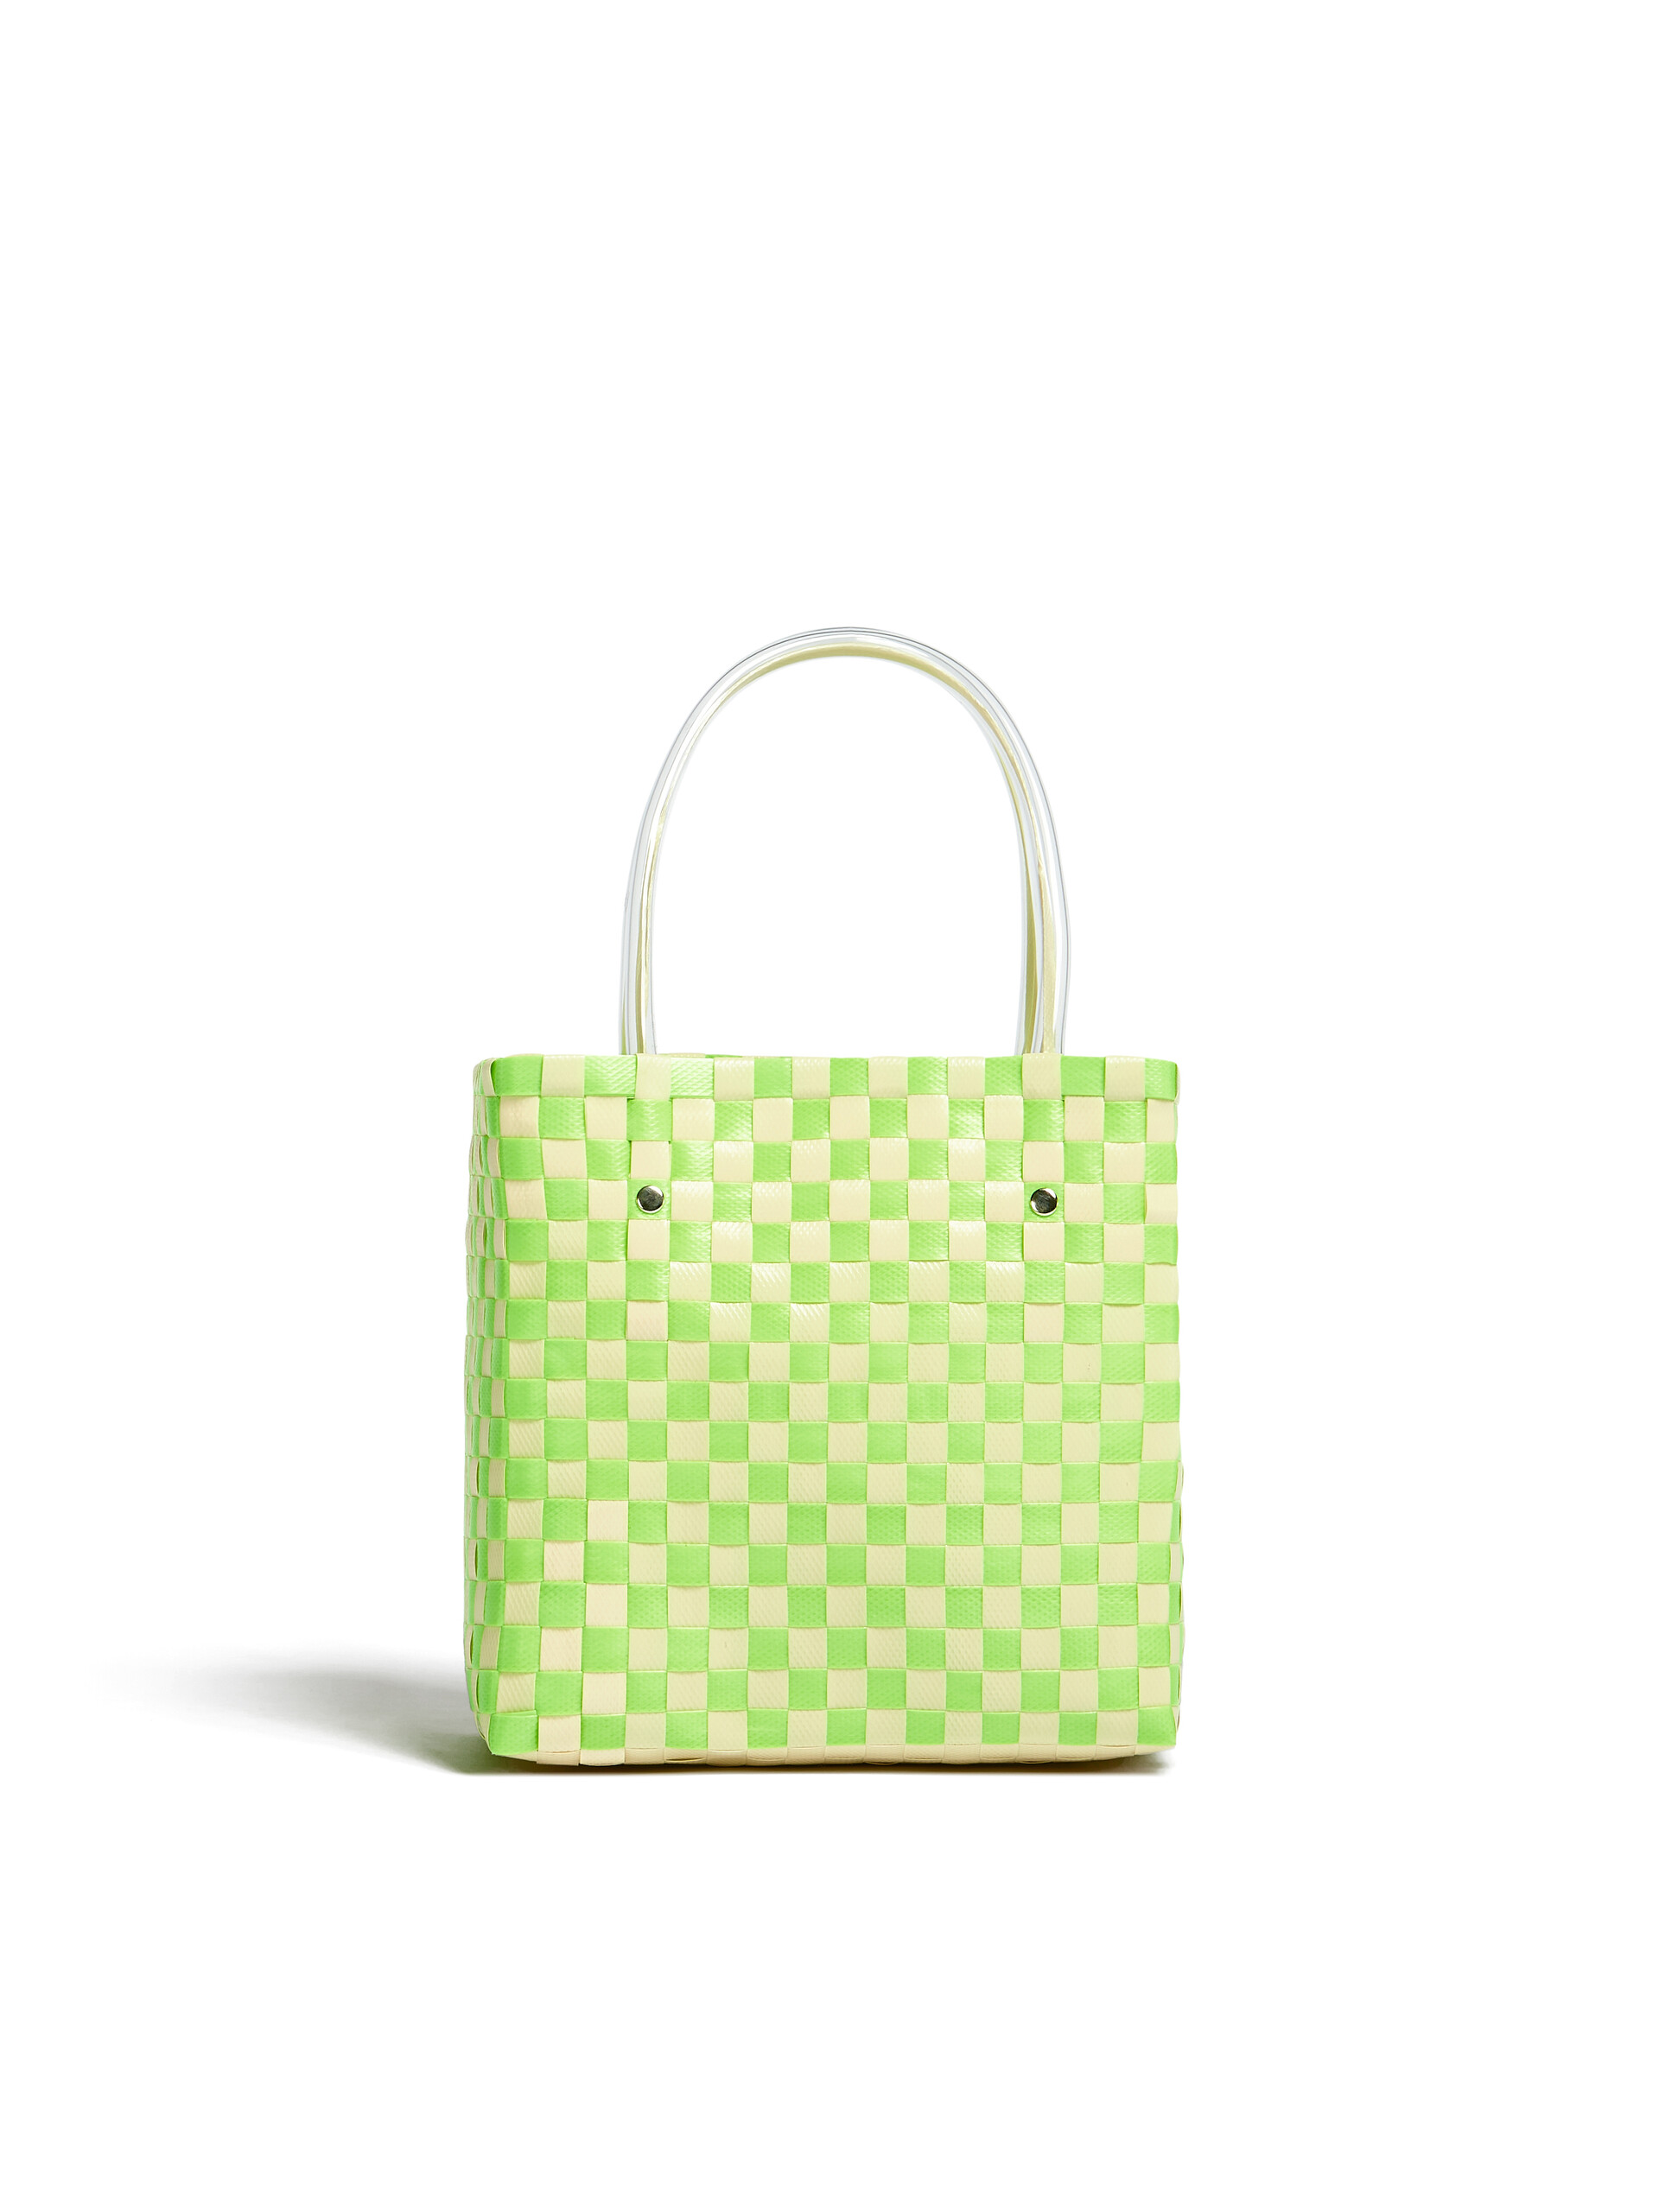 MARNI MARKET mini bag in polypropylene with green M logo - Bags - Image 3